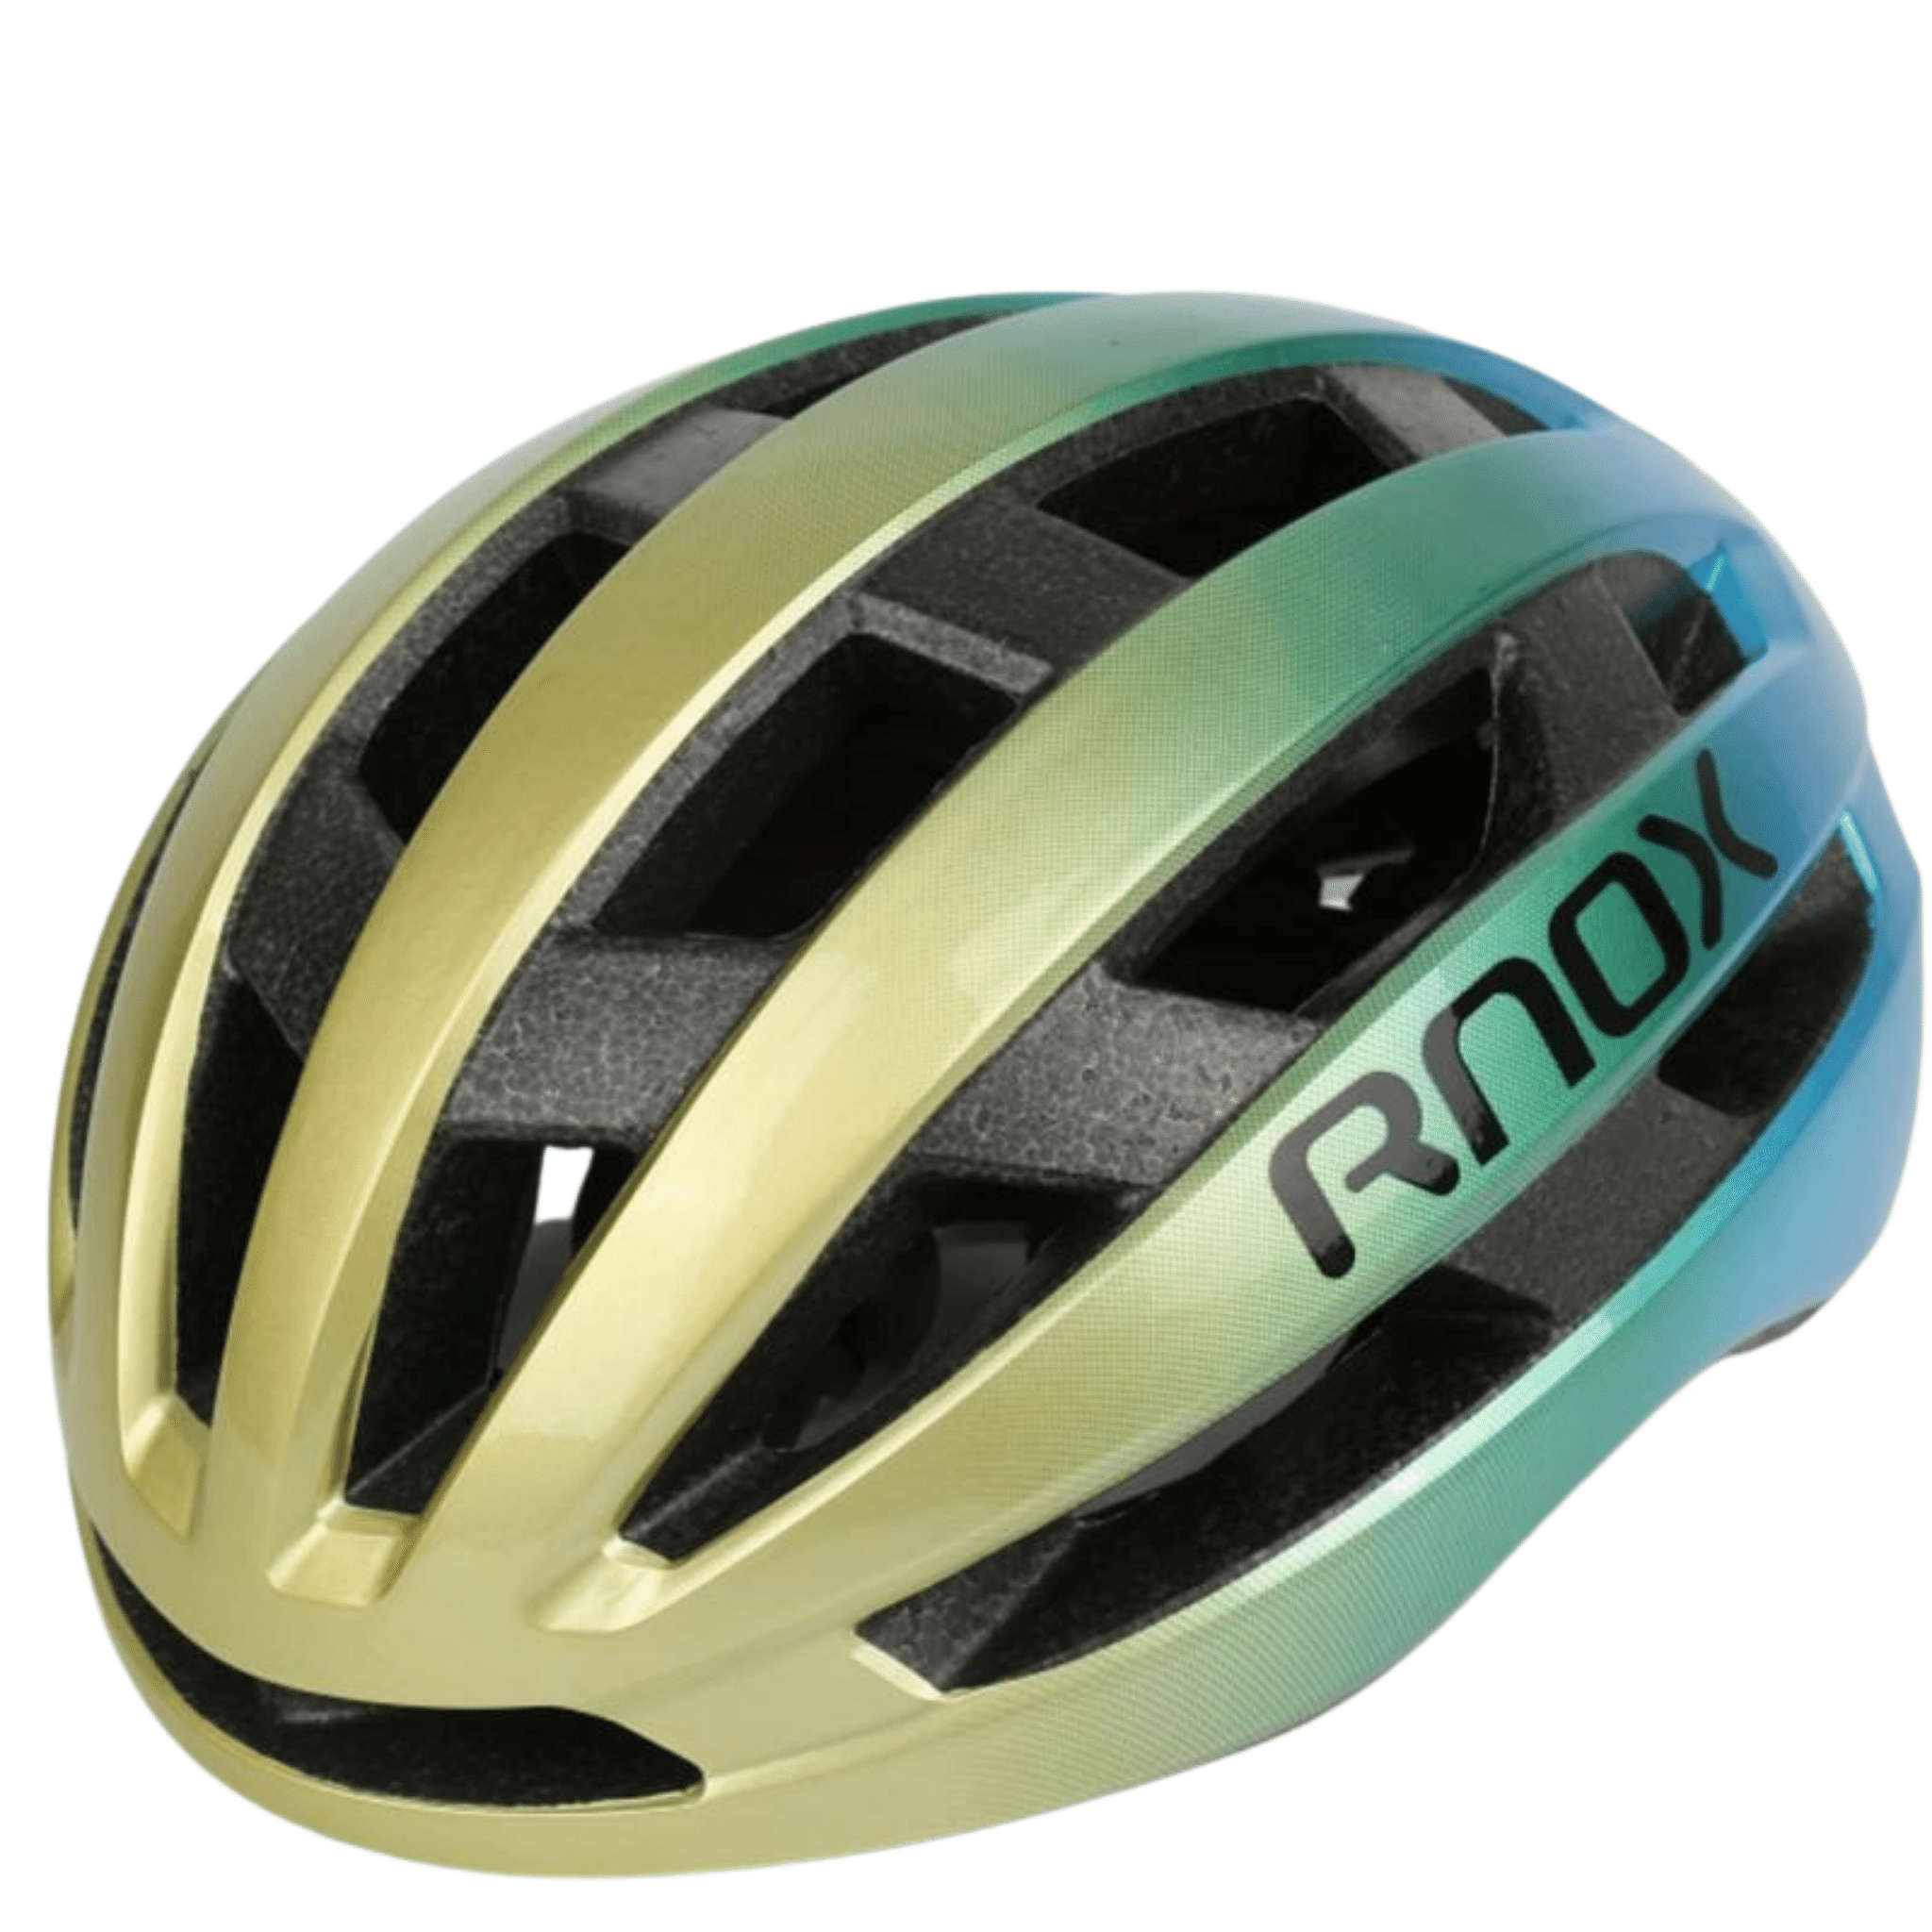 Ultralight Cycling Helmet